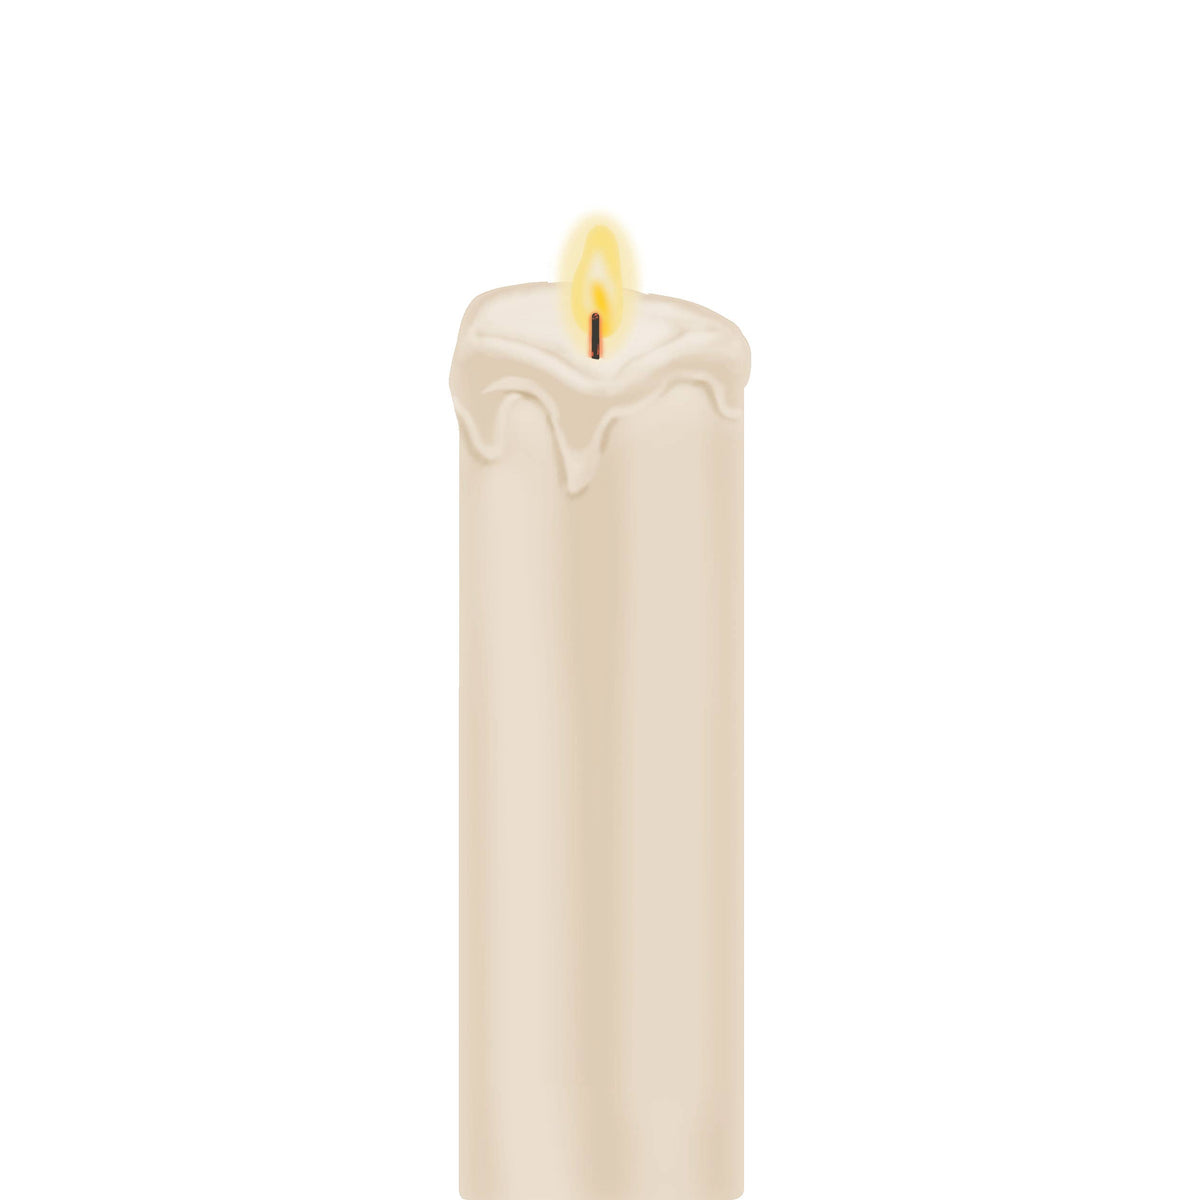 LED White Window Cling Candle